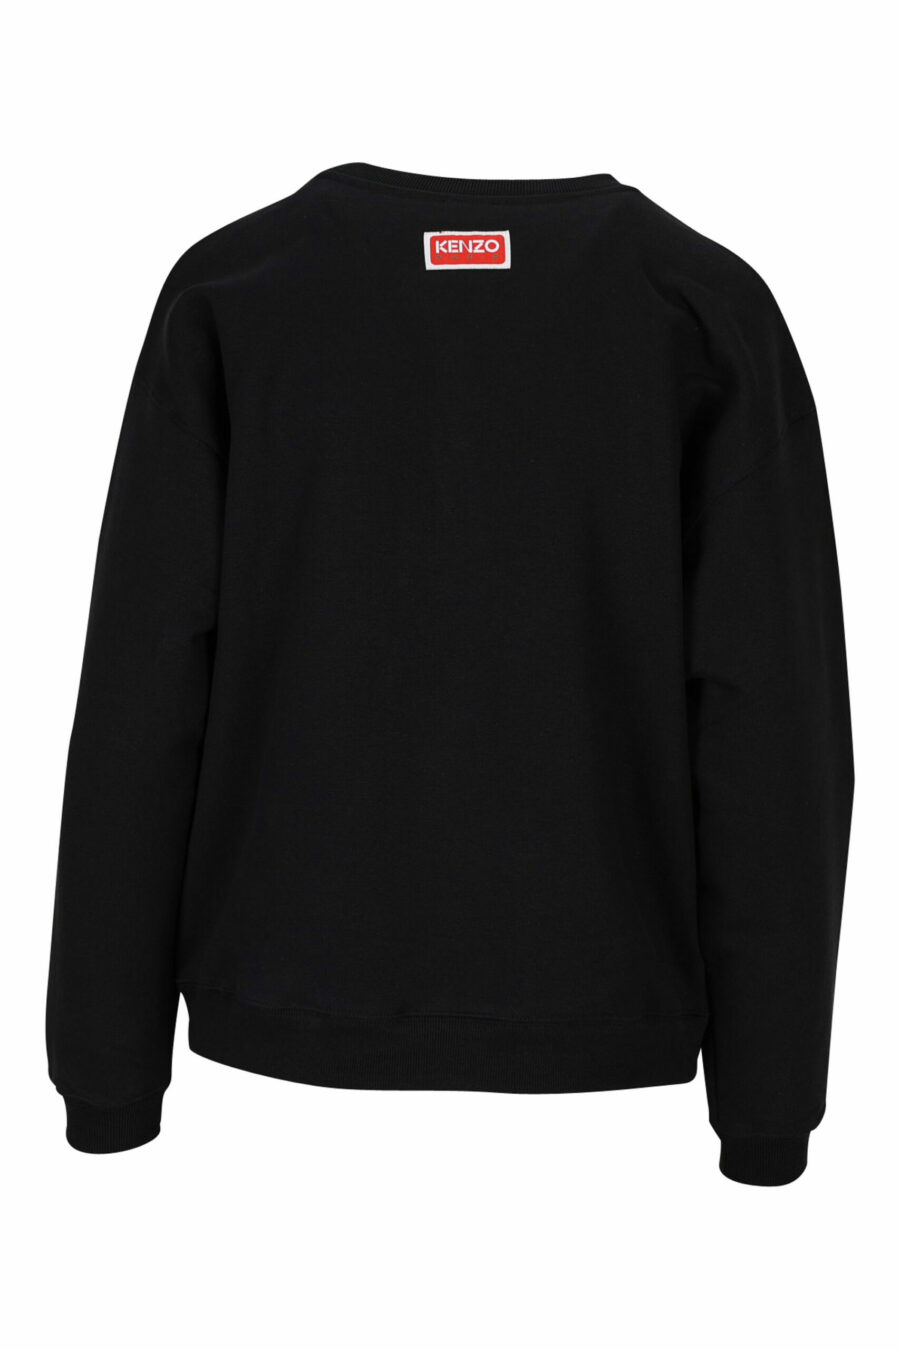 Black sweatshirt with "boke flower" logo - 3612230483033 1 scaled